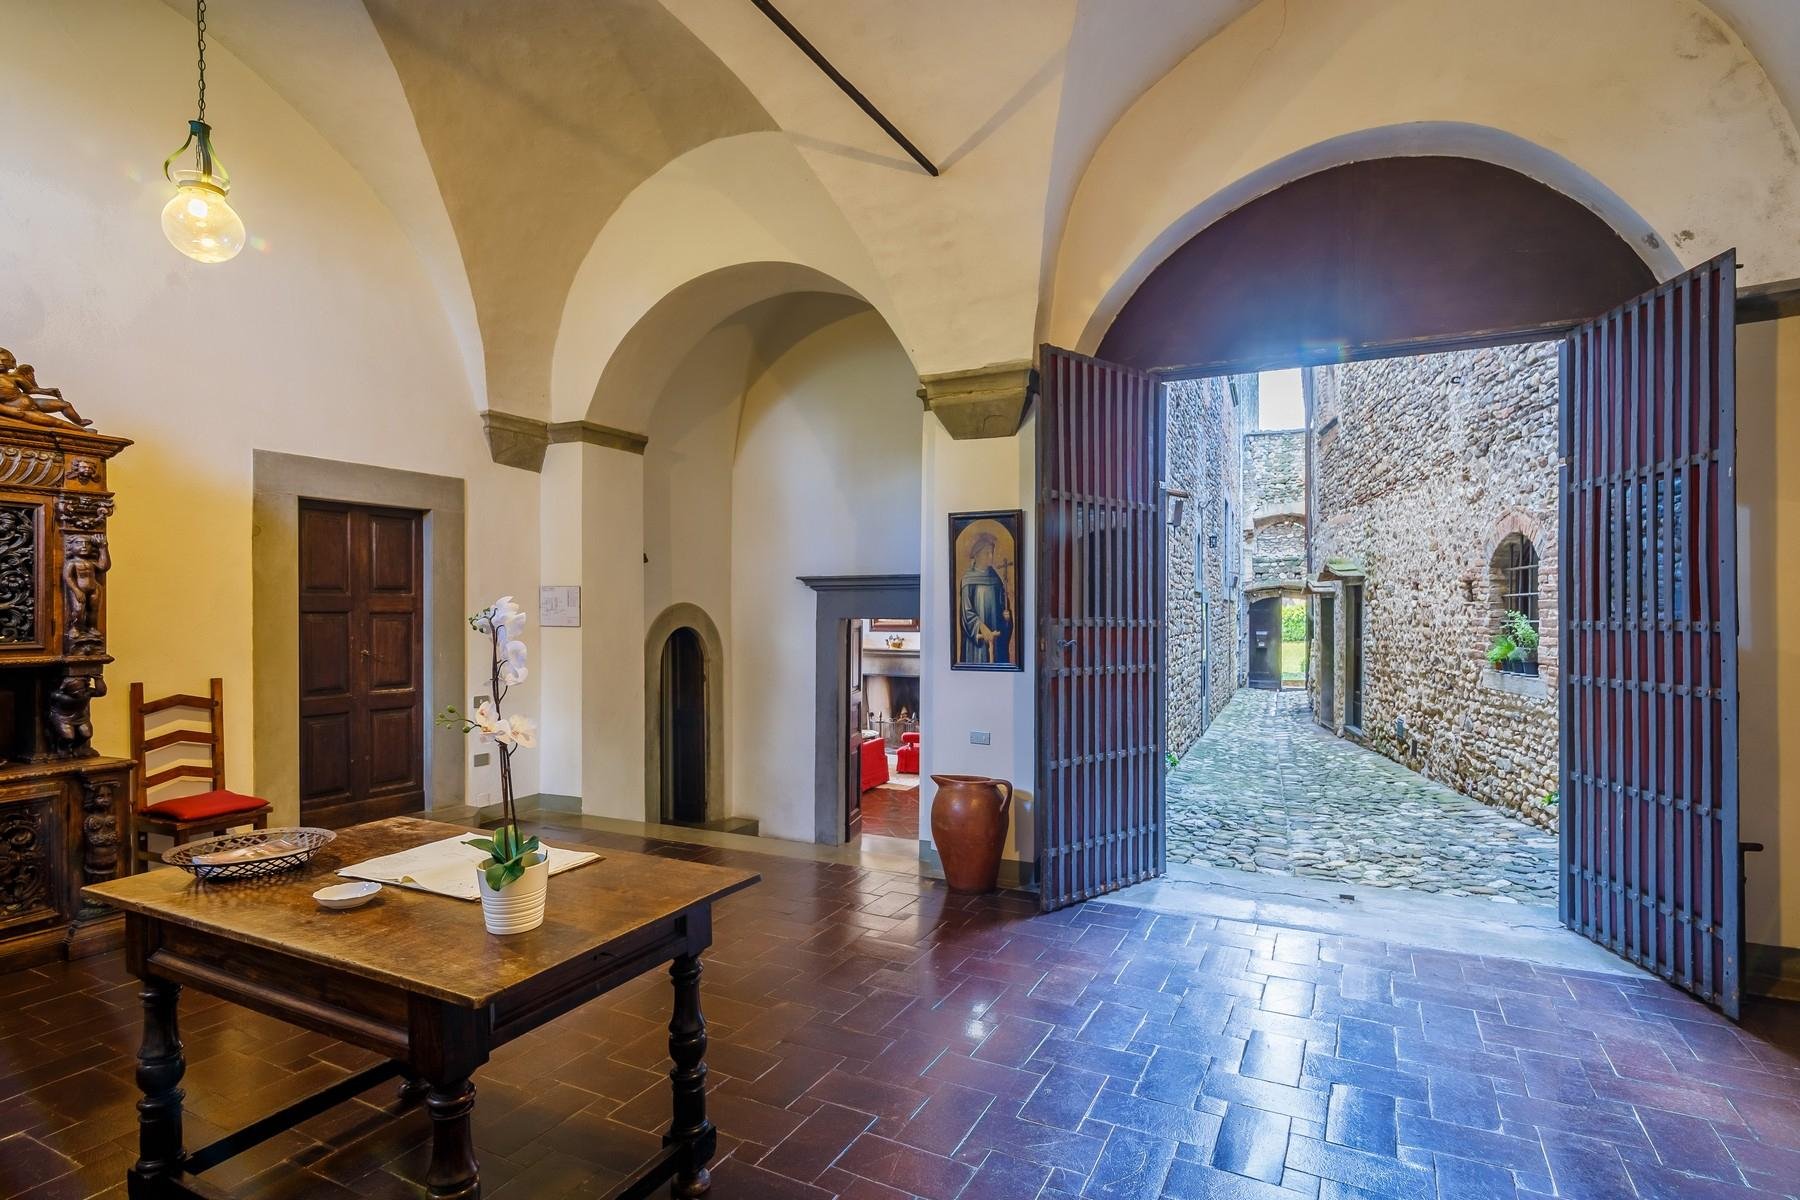 Francis York Medieval Castle Turned Renaissance Villa in Tuscany, Italy  00019.jpg